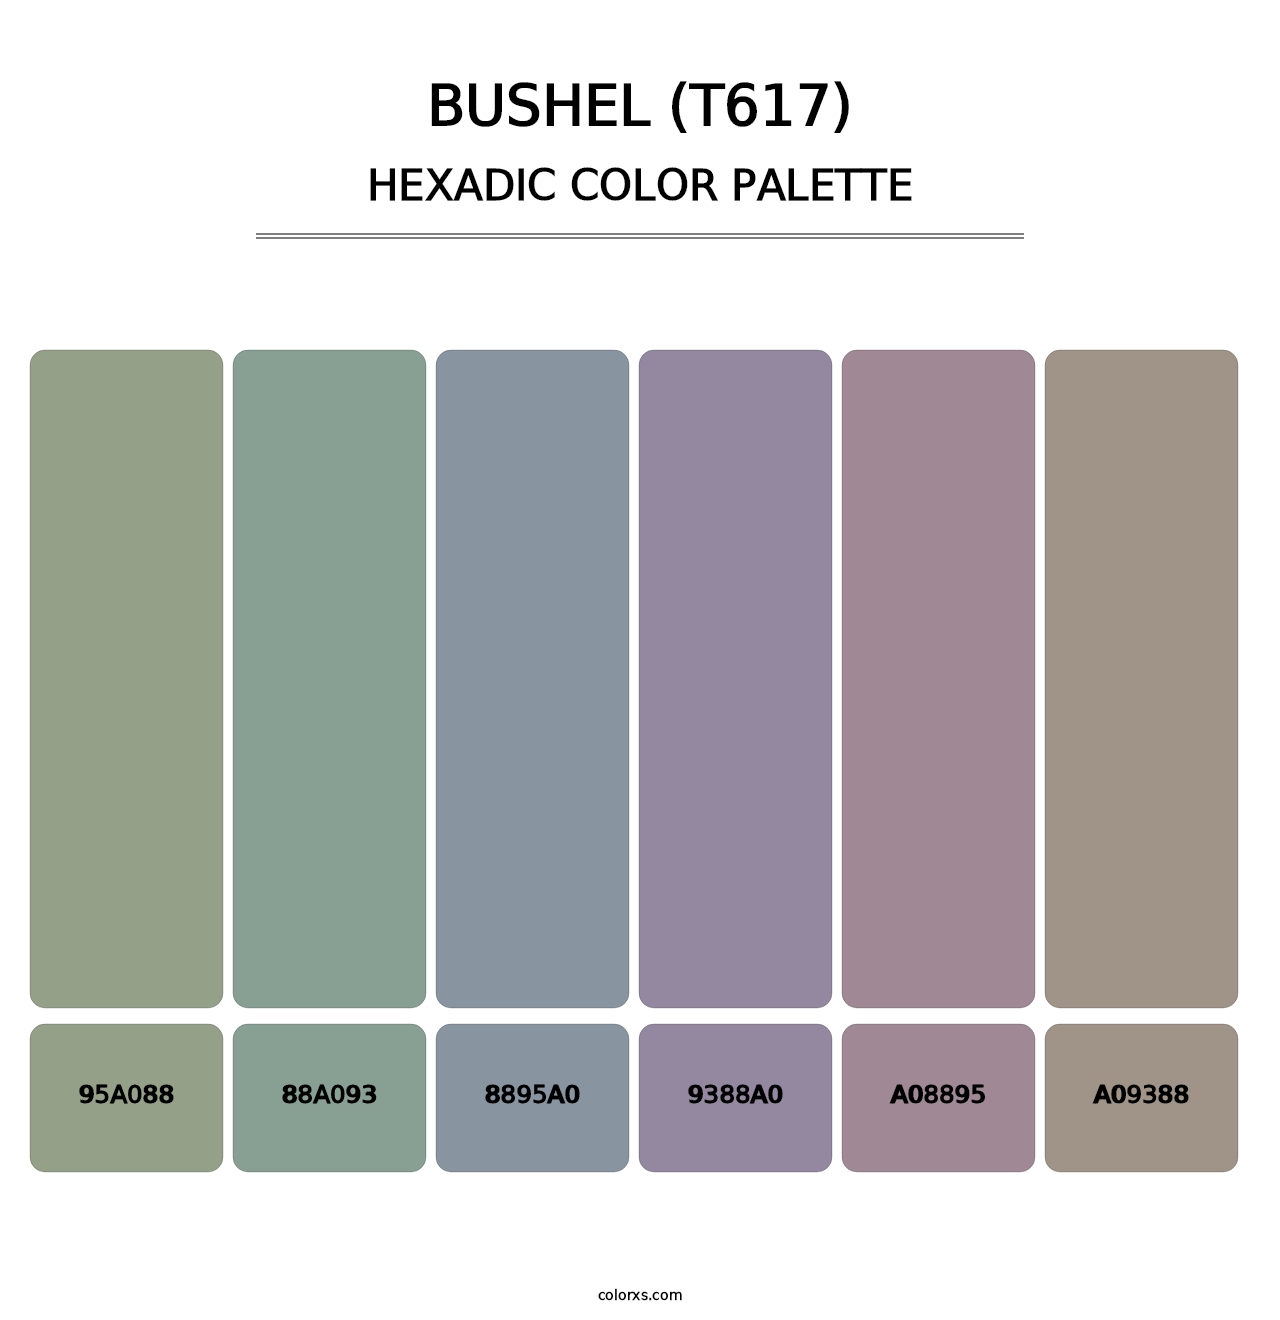 Bushel (T617) - Hexadic Color Palette